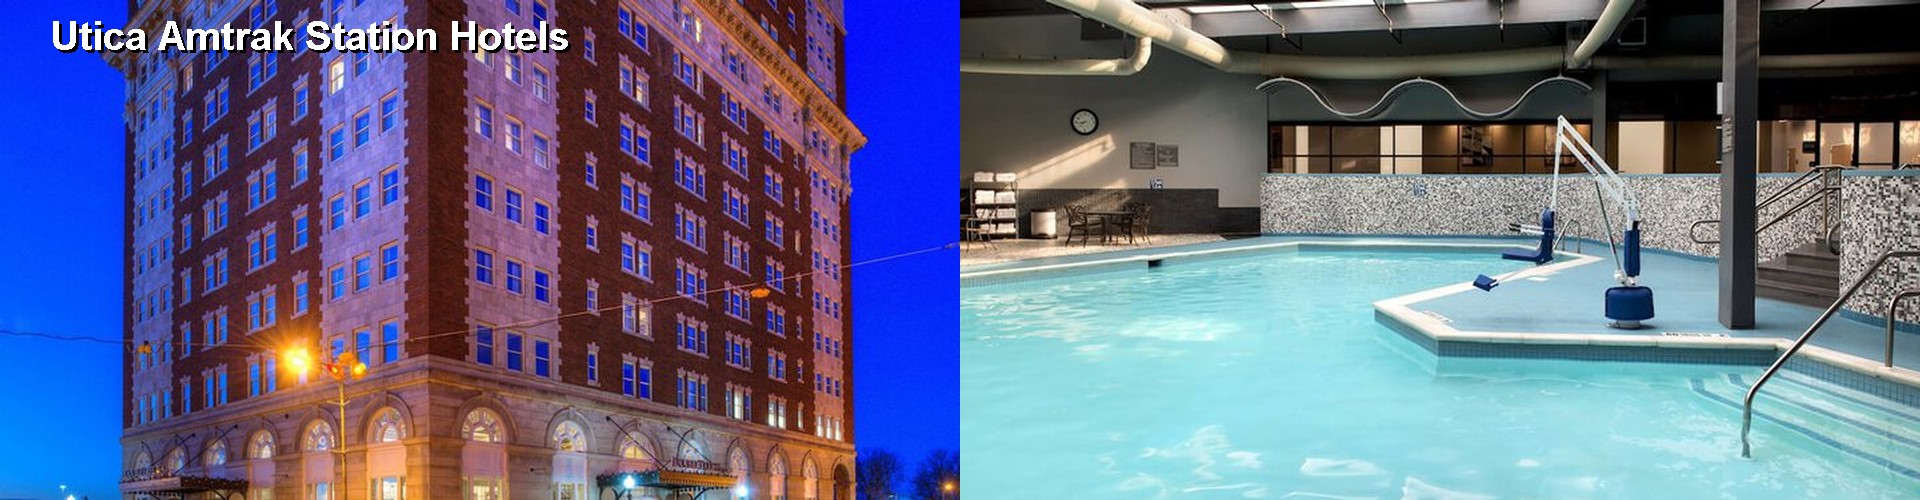 5 Best Hotels near Utica Amtrak Station